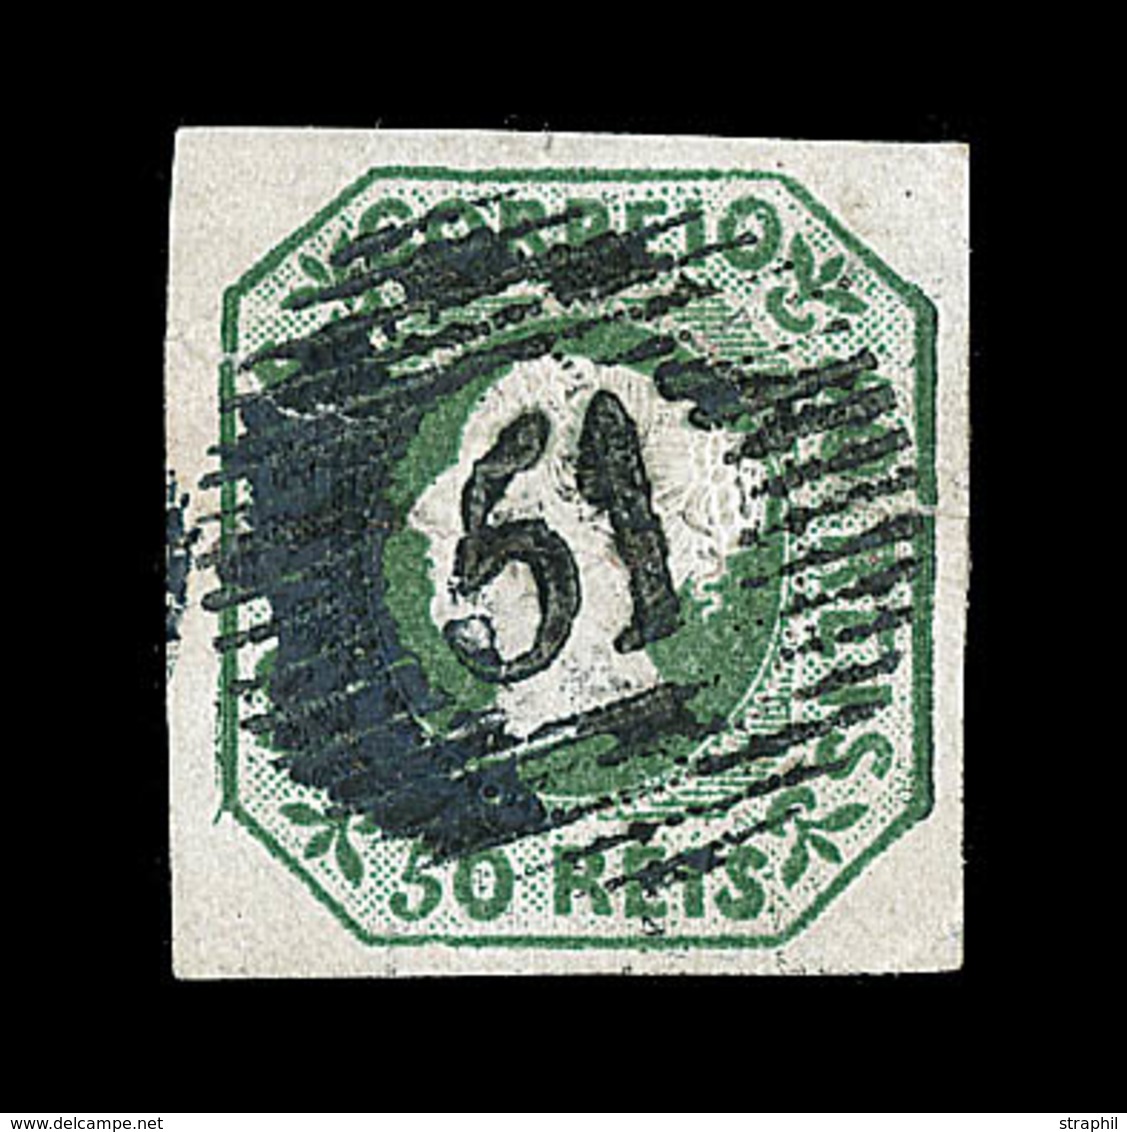 O PORTUGAL - O - N°3 - 50r. Vert - Obl "51"- TB - Unused Stamps